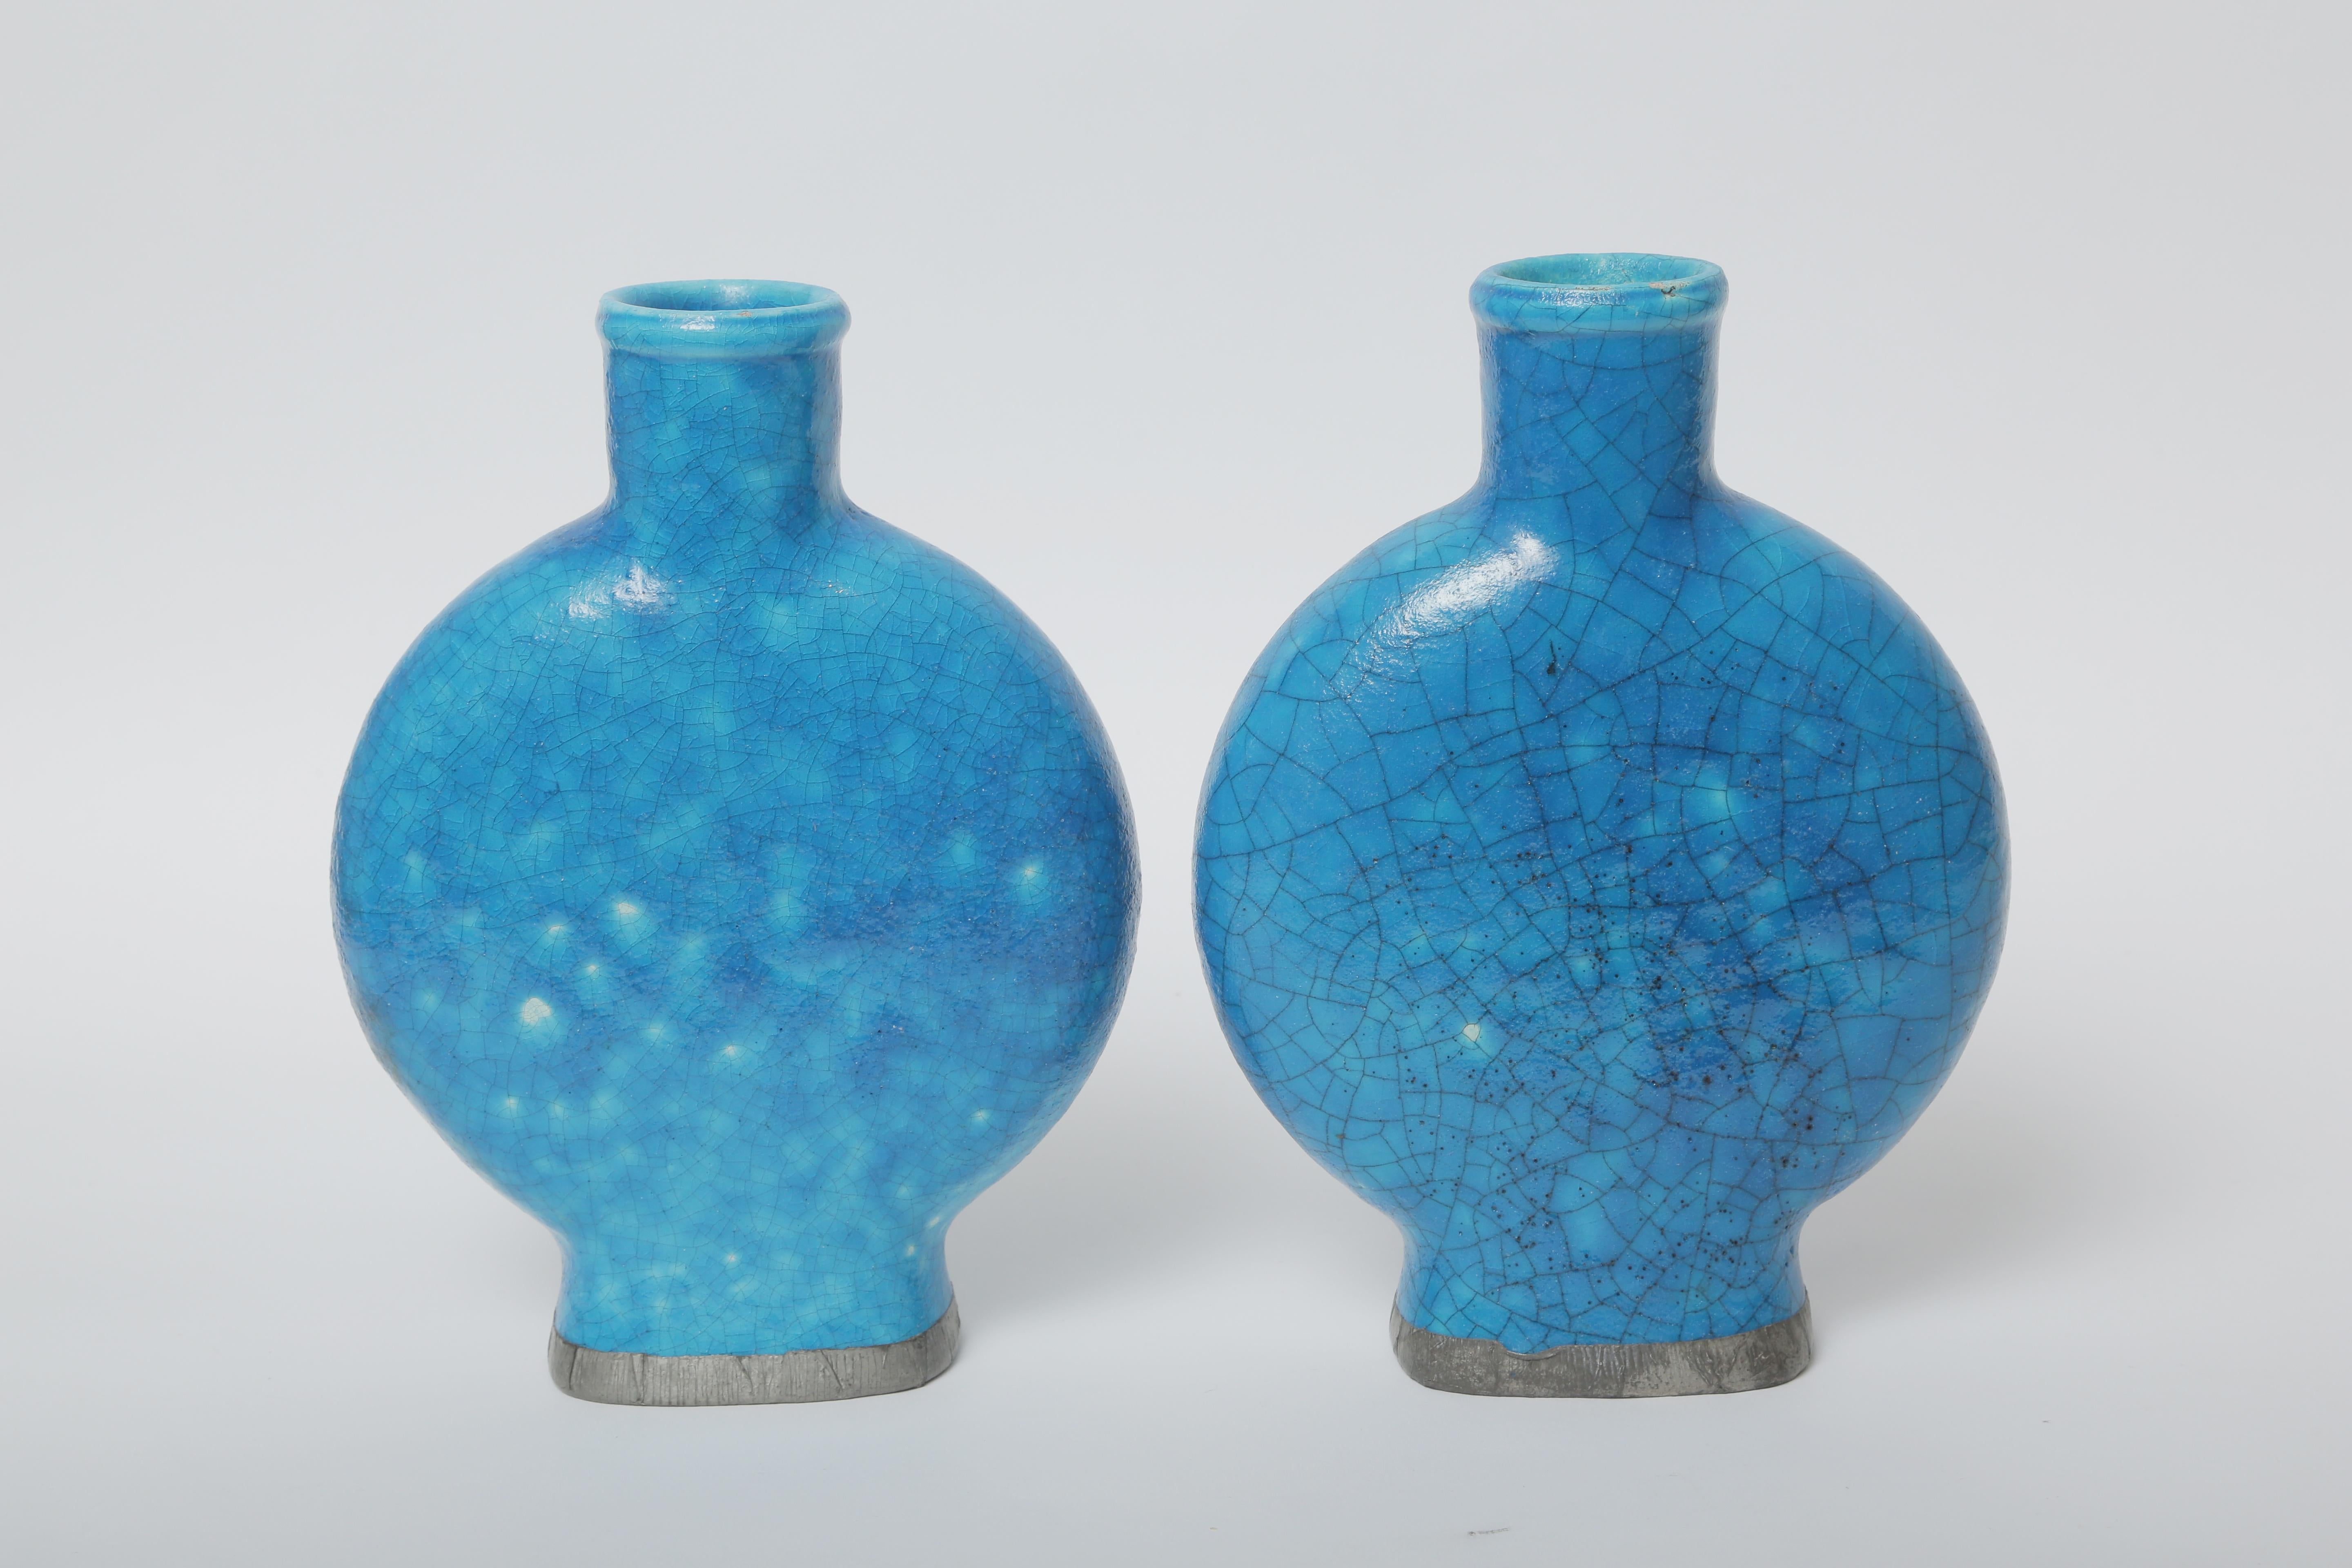 Glazed Pair of Turquoise Vases, Edmond Lachenal Signed. Art Deco Period, Rare